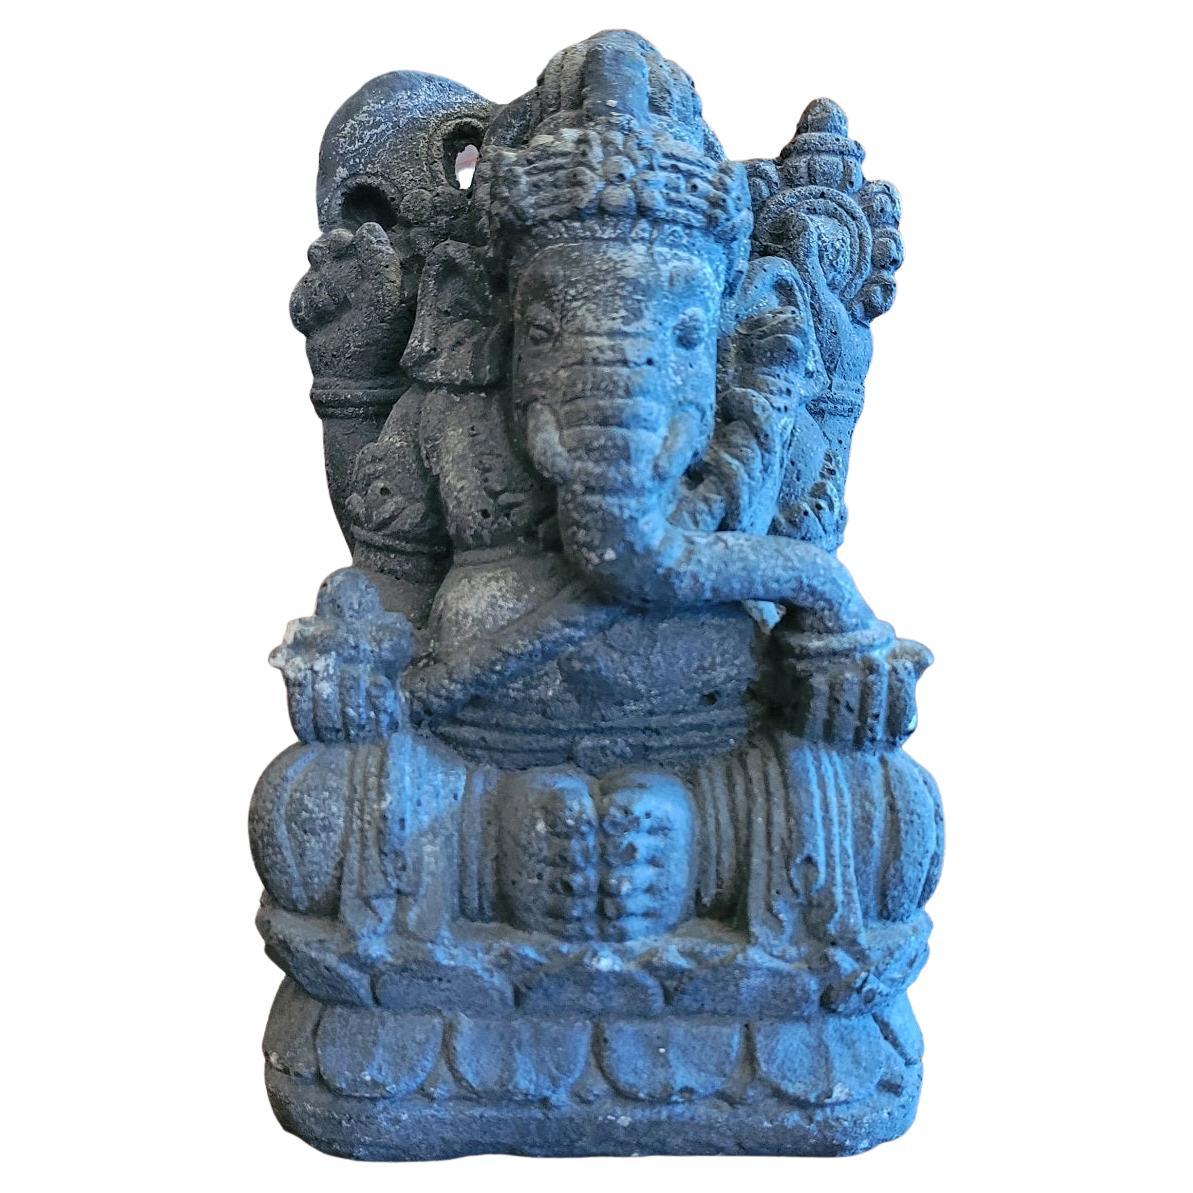 Vintage Indian Pumice Stone Carving of Ganesha